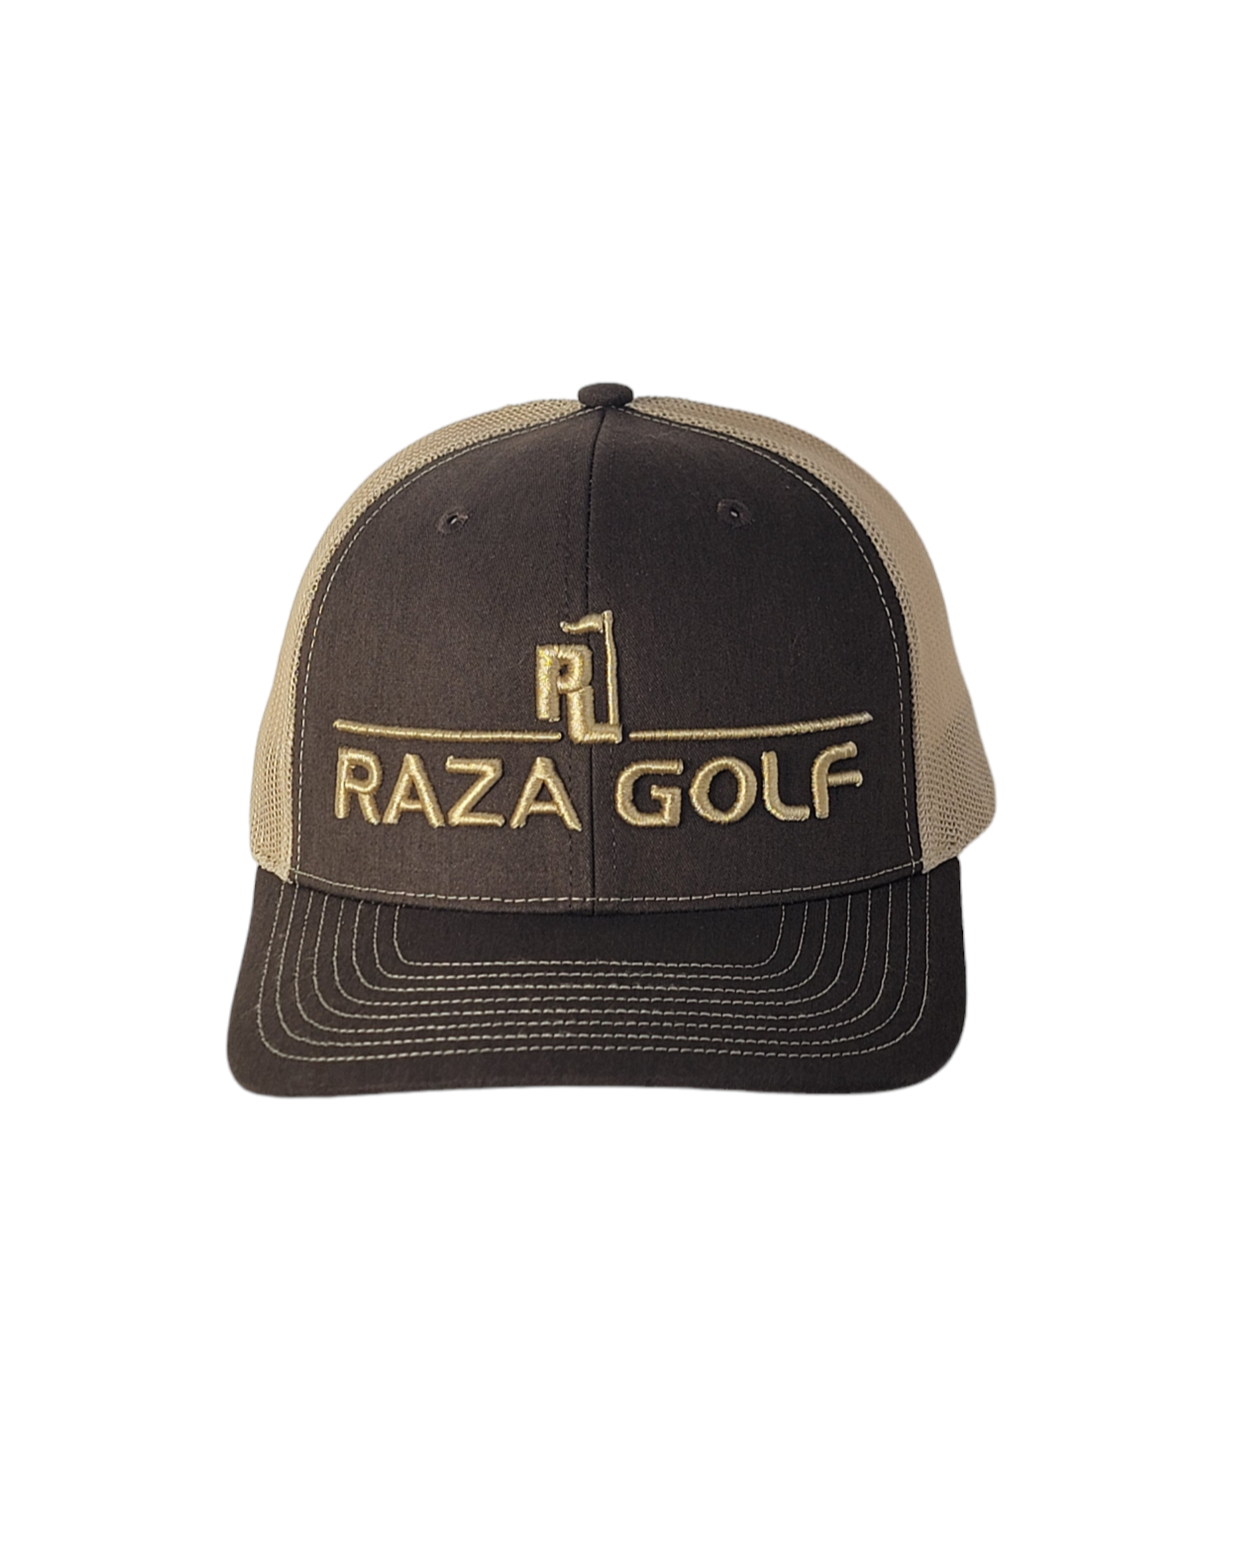 Raza Golf Brown/Khaki Linear Trucker Hat